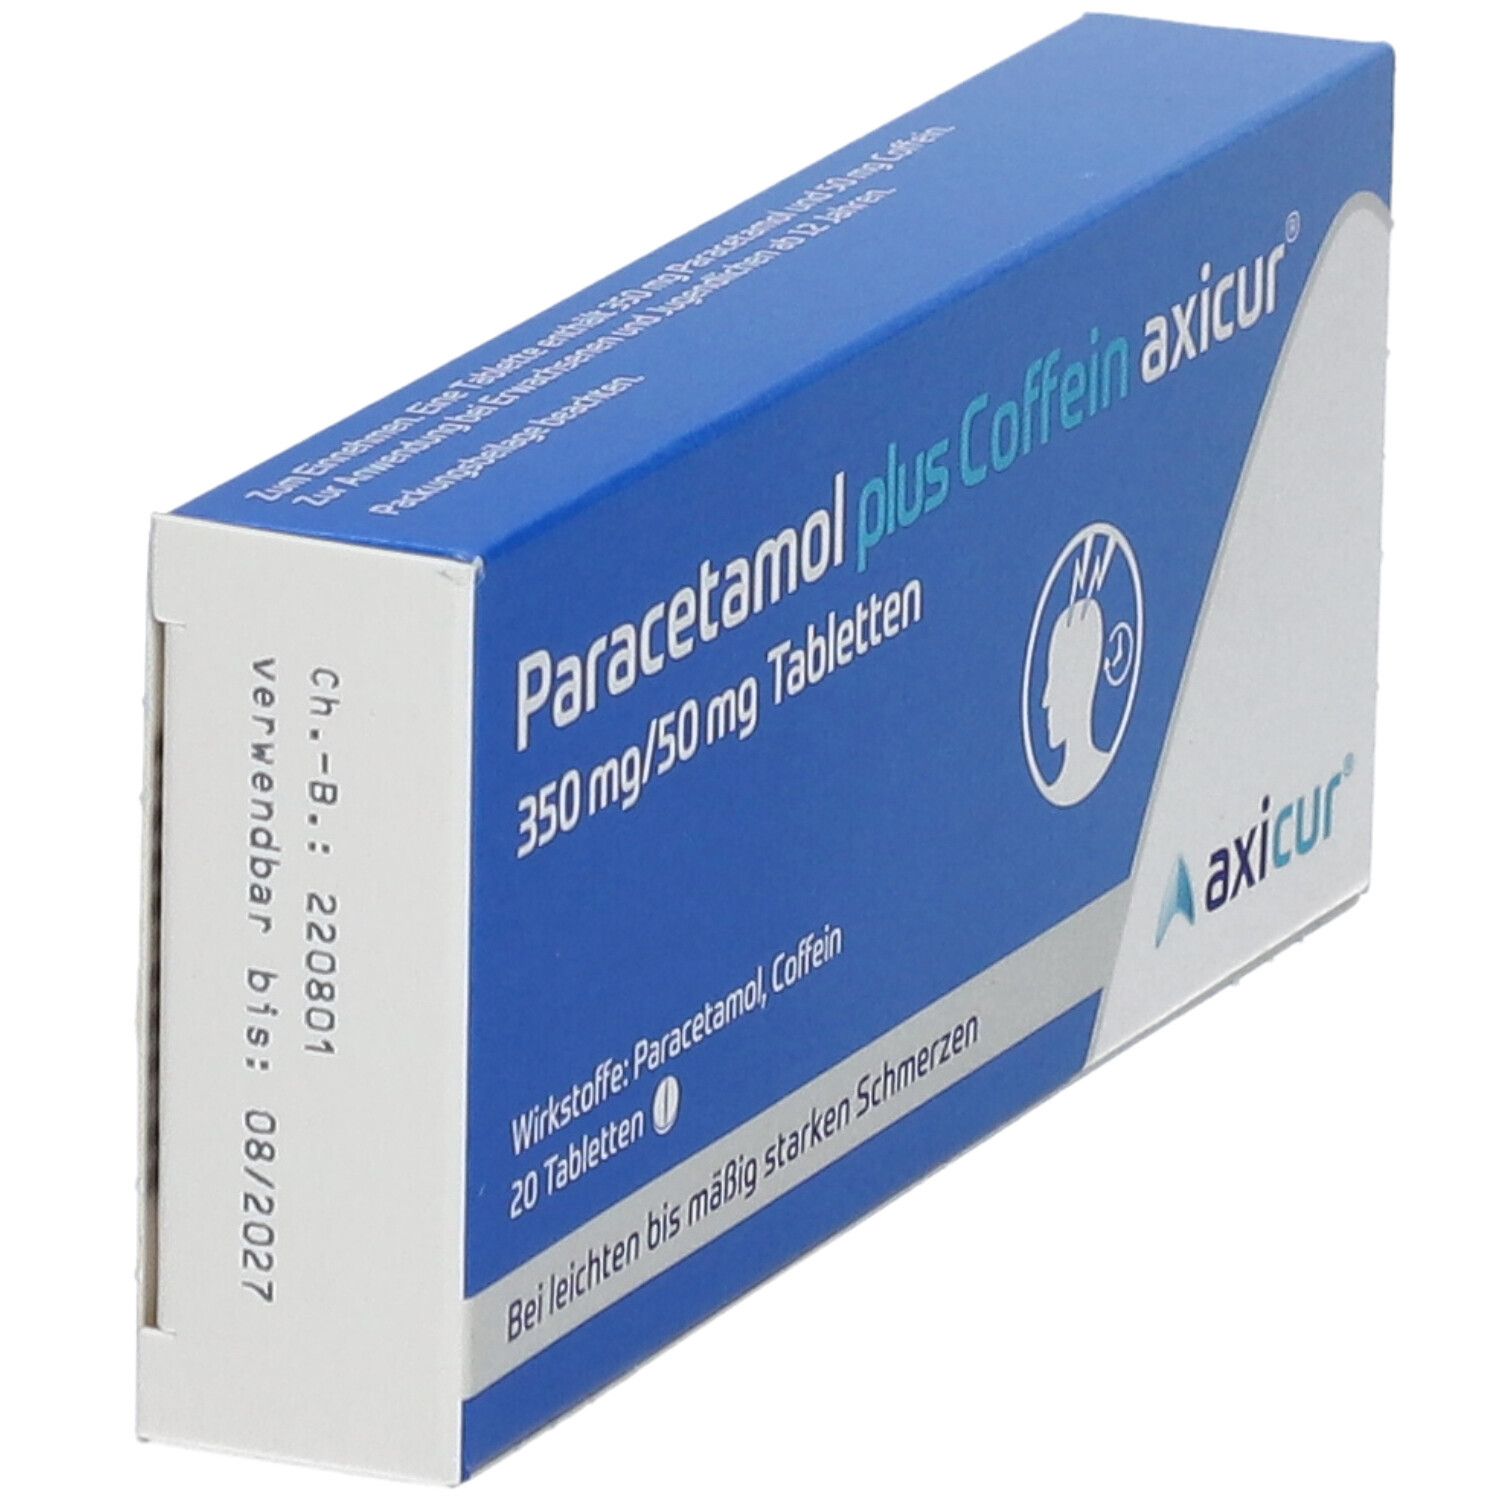 Paracetamol plus Coffein axicur 350 mg/50 mg Tabletten